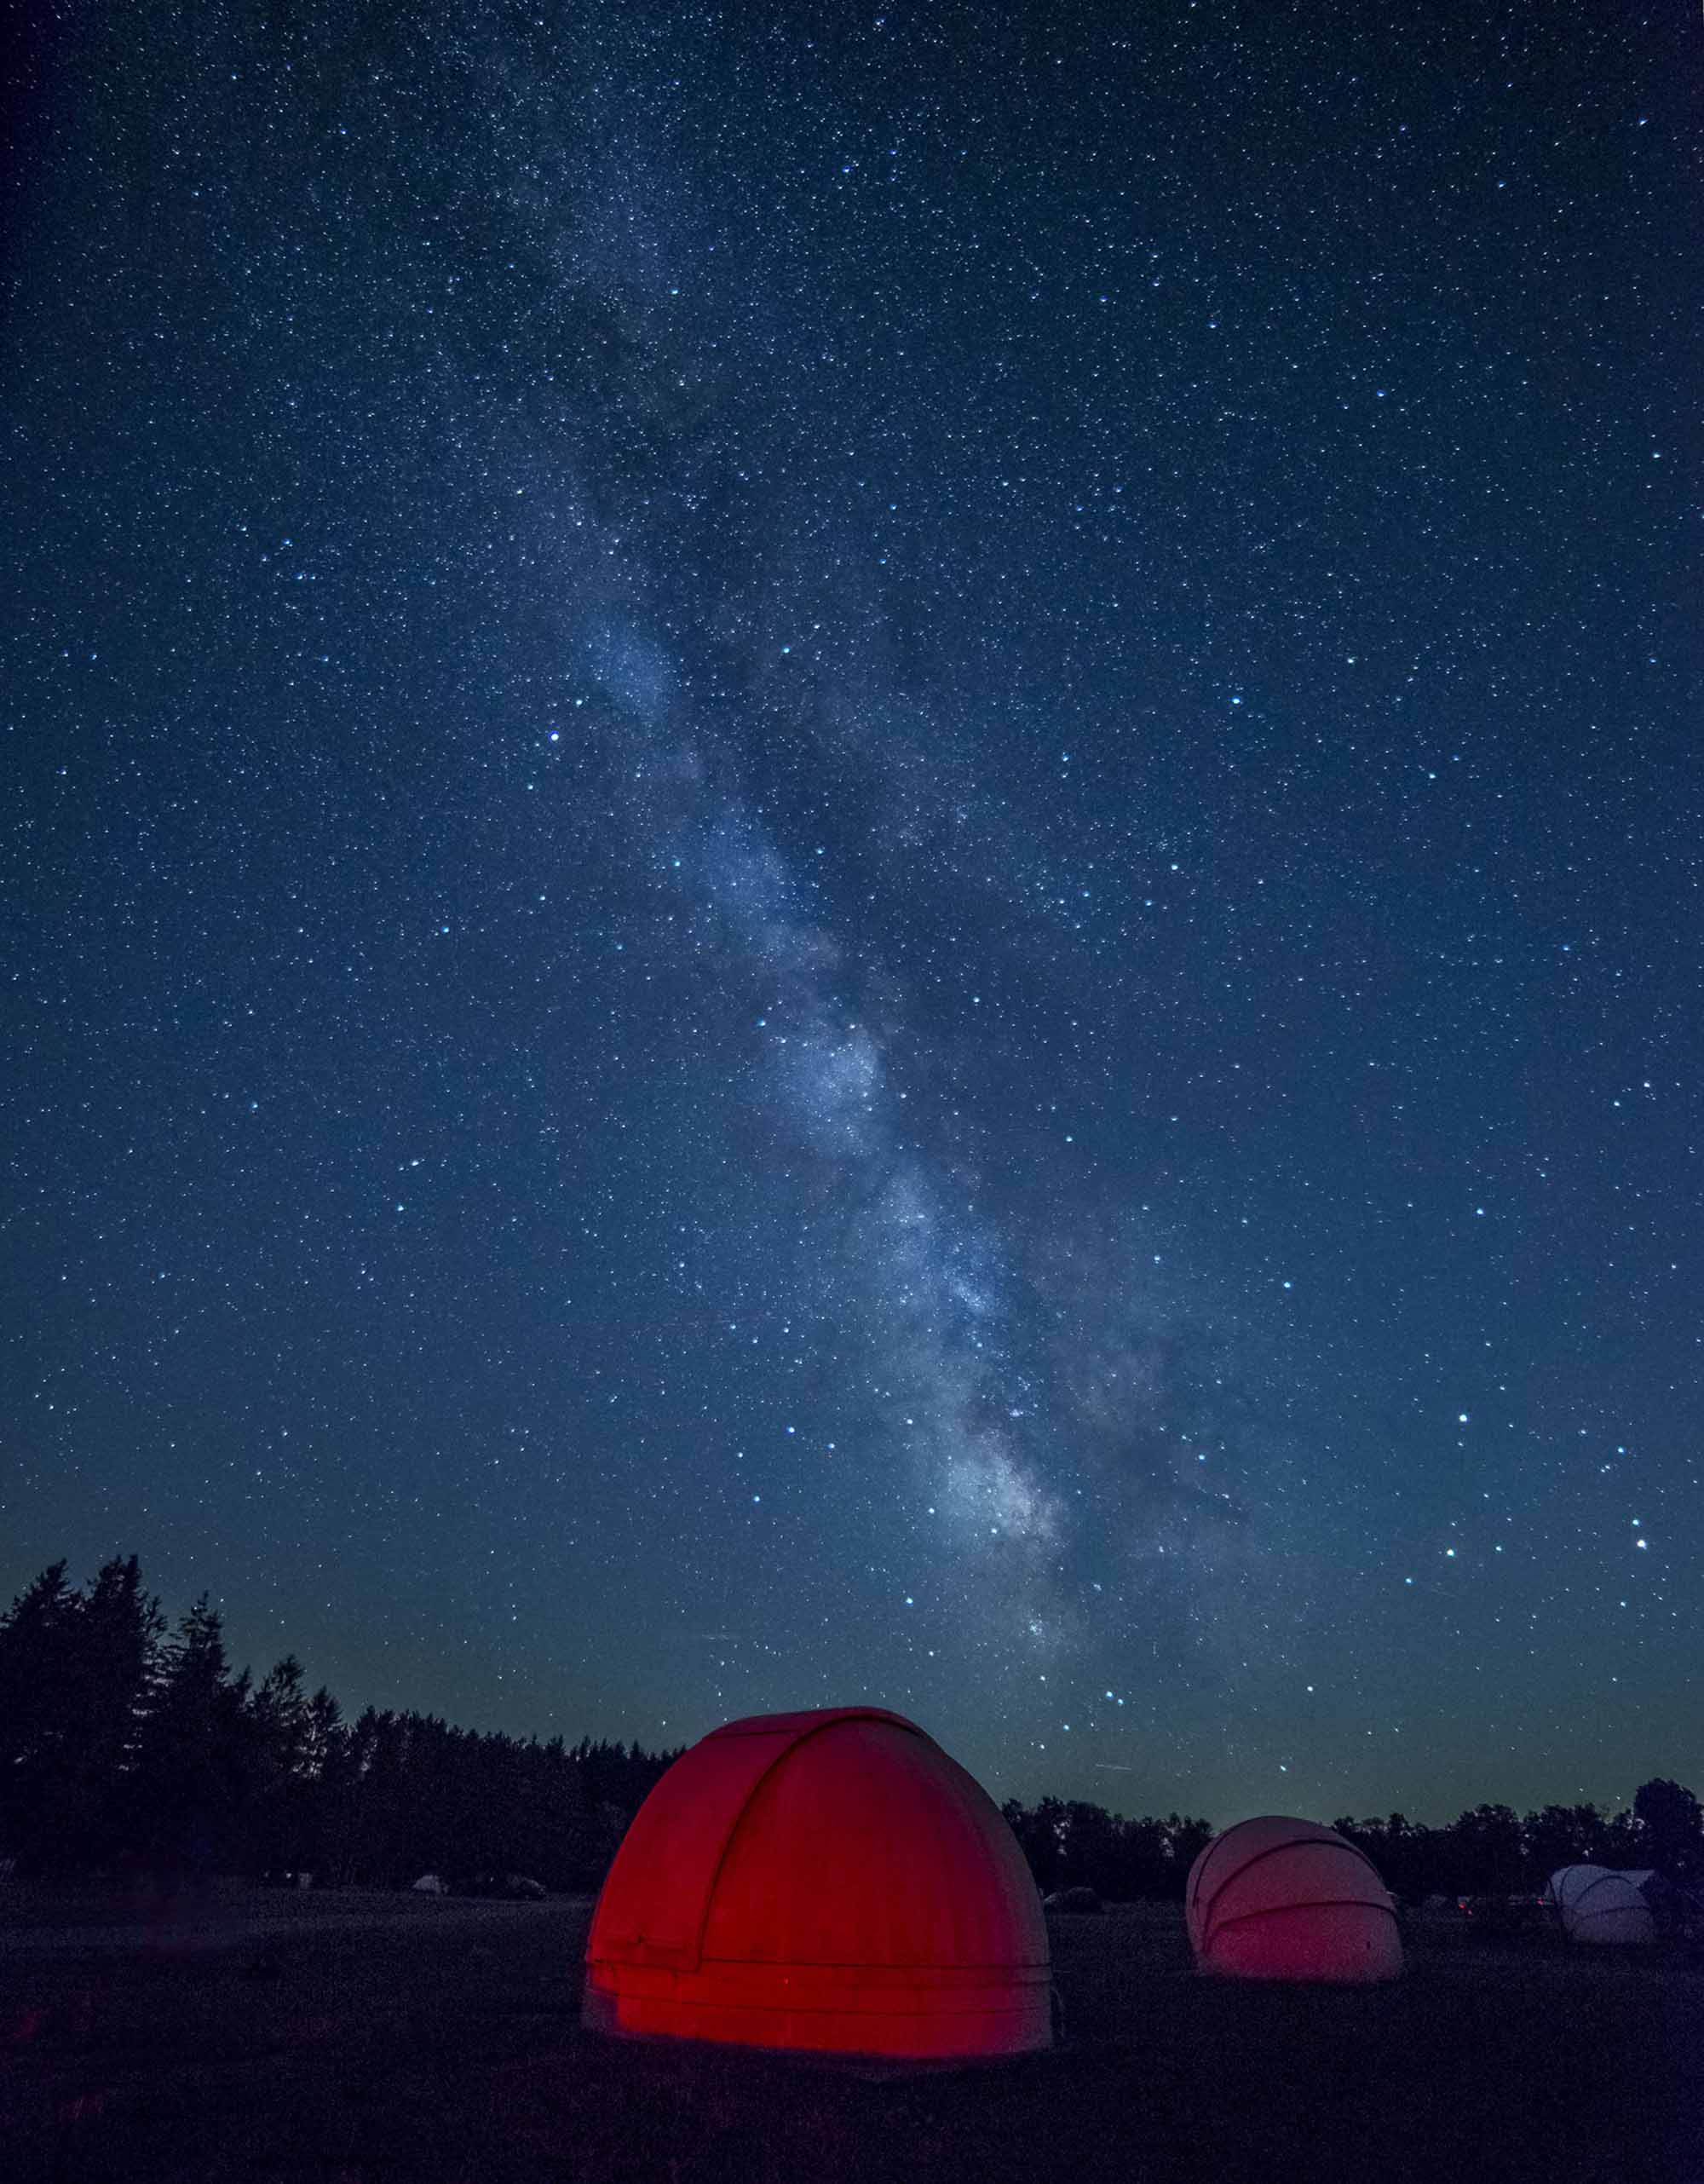 Stargazing at Cherry Springs Springs State Park